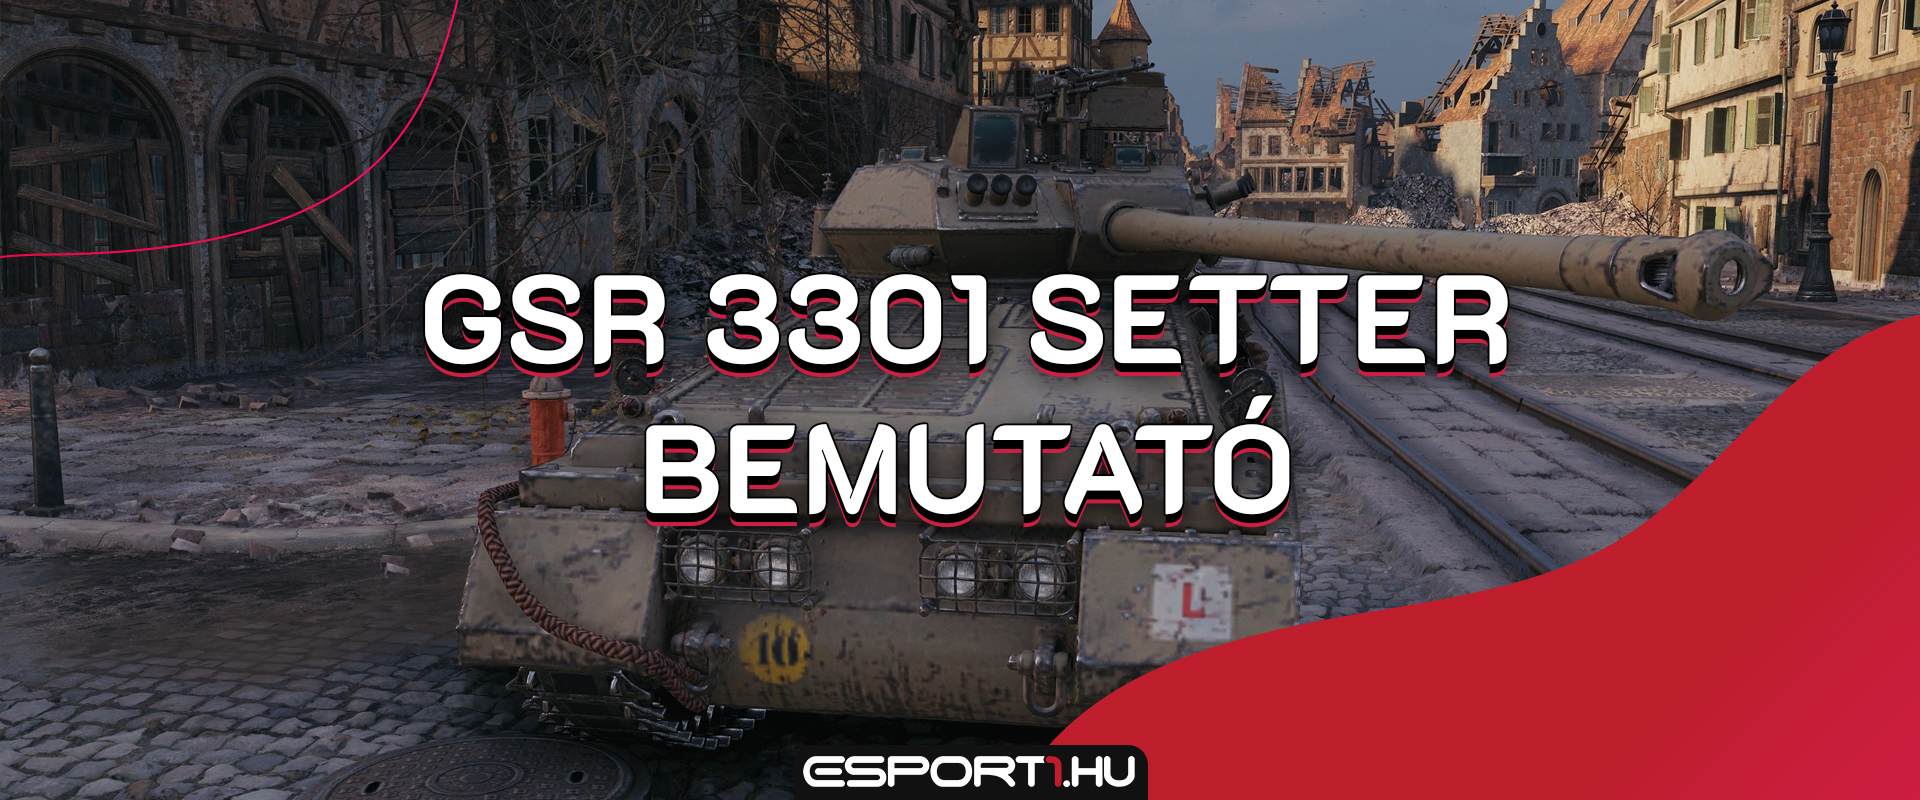 GSR 3301 Setter - A brit könnyű tankok előhírnöke